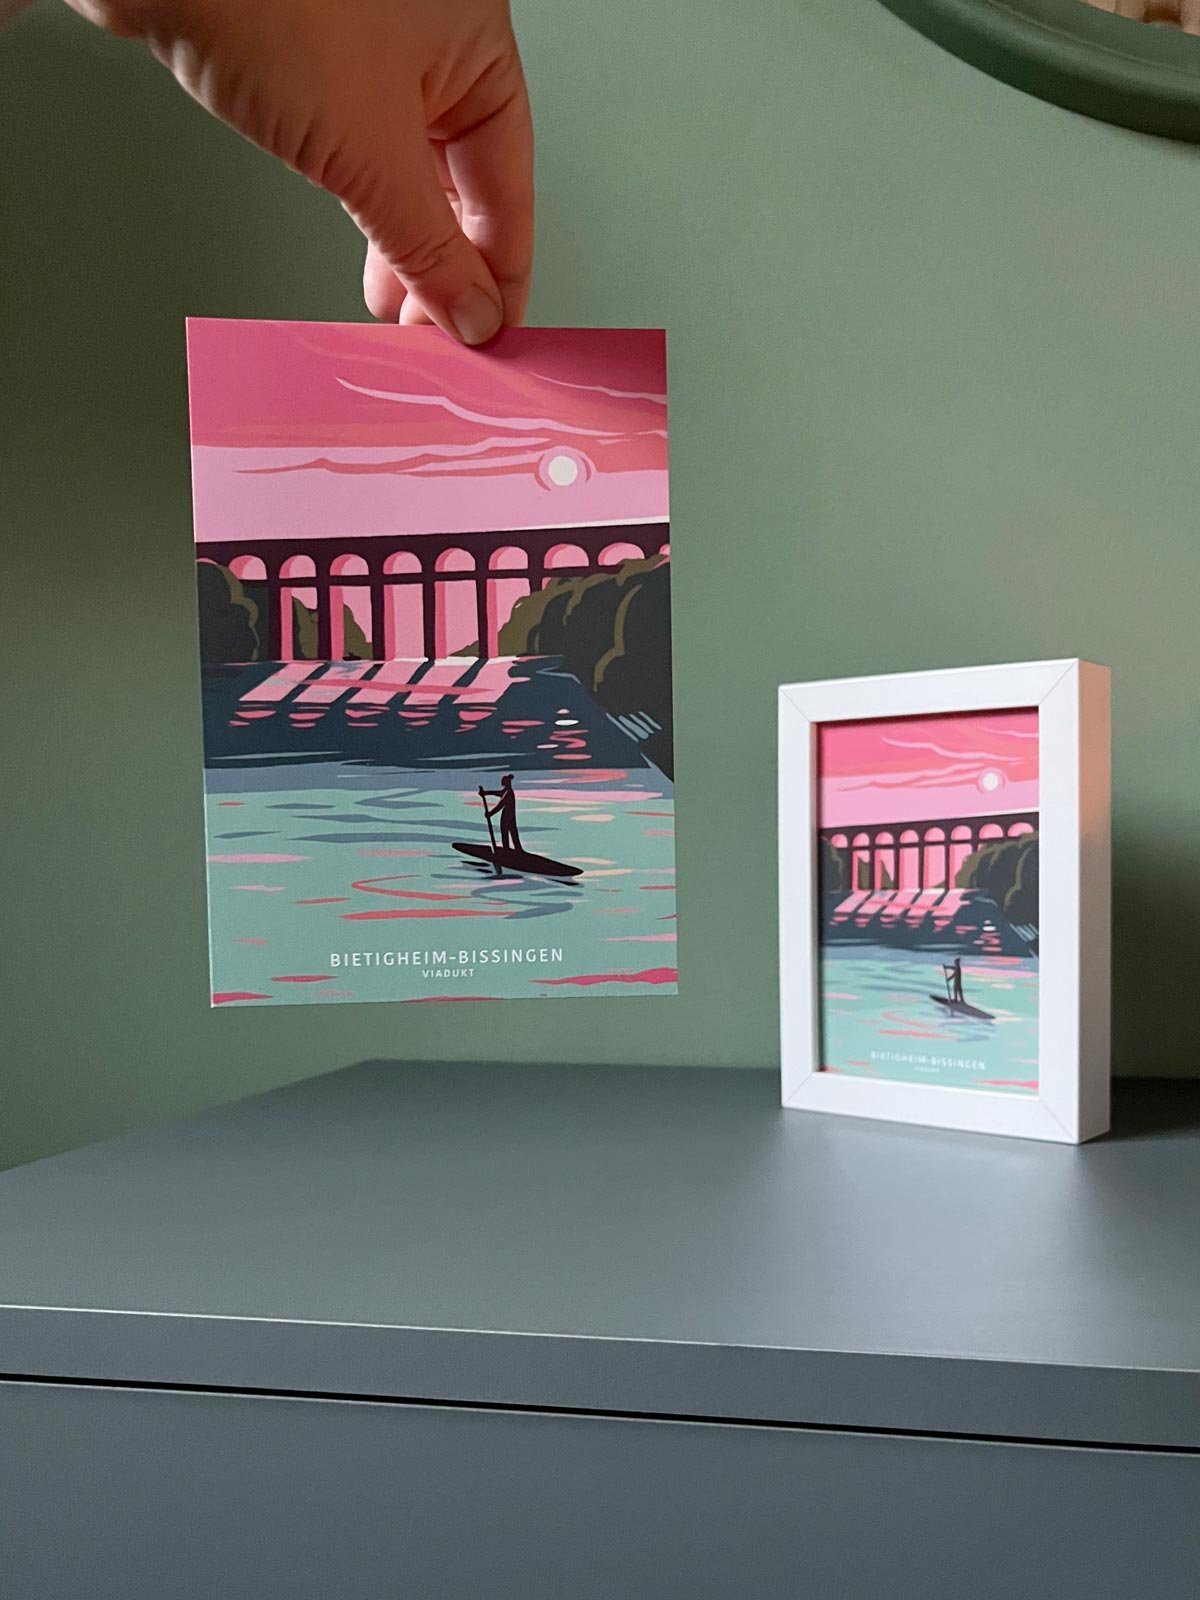 viadukt-bietigheim-bissingen-postkarten-motiv-travelposter-illustratorin-julia-skala-ludwigsburg.jpg